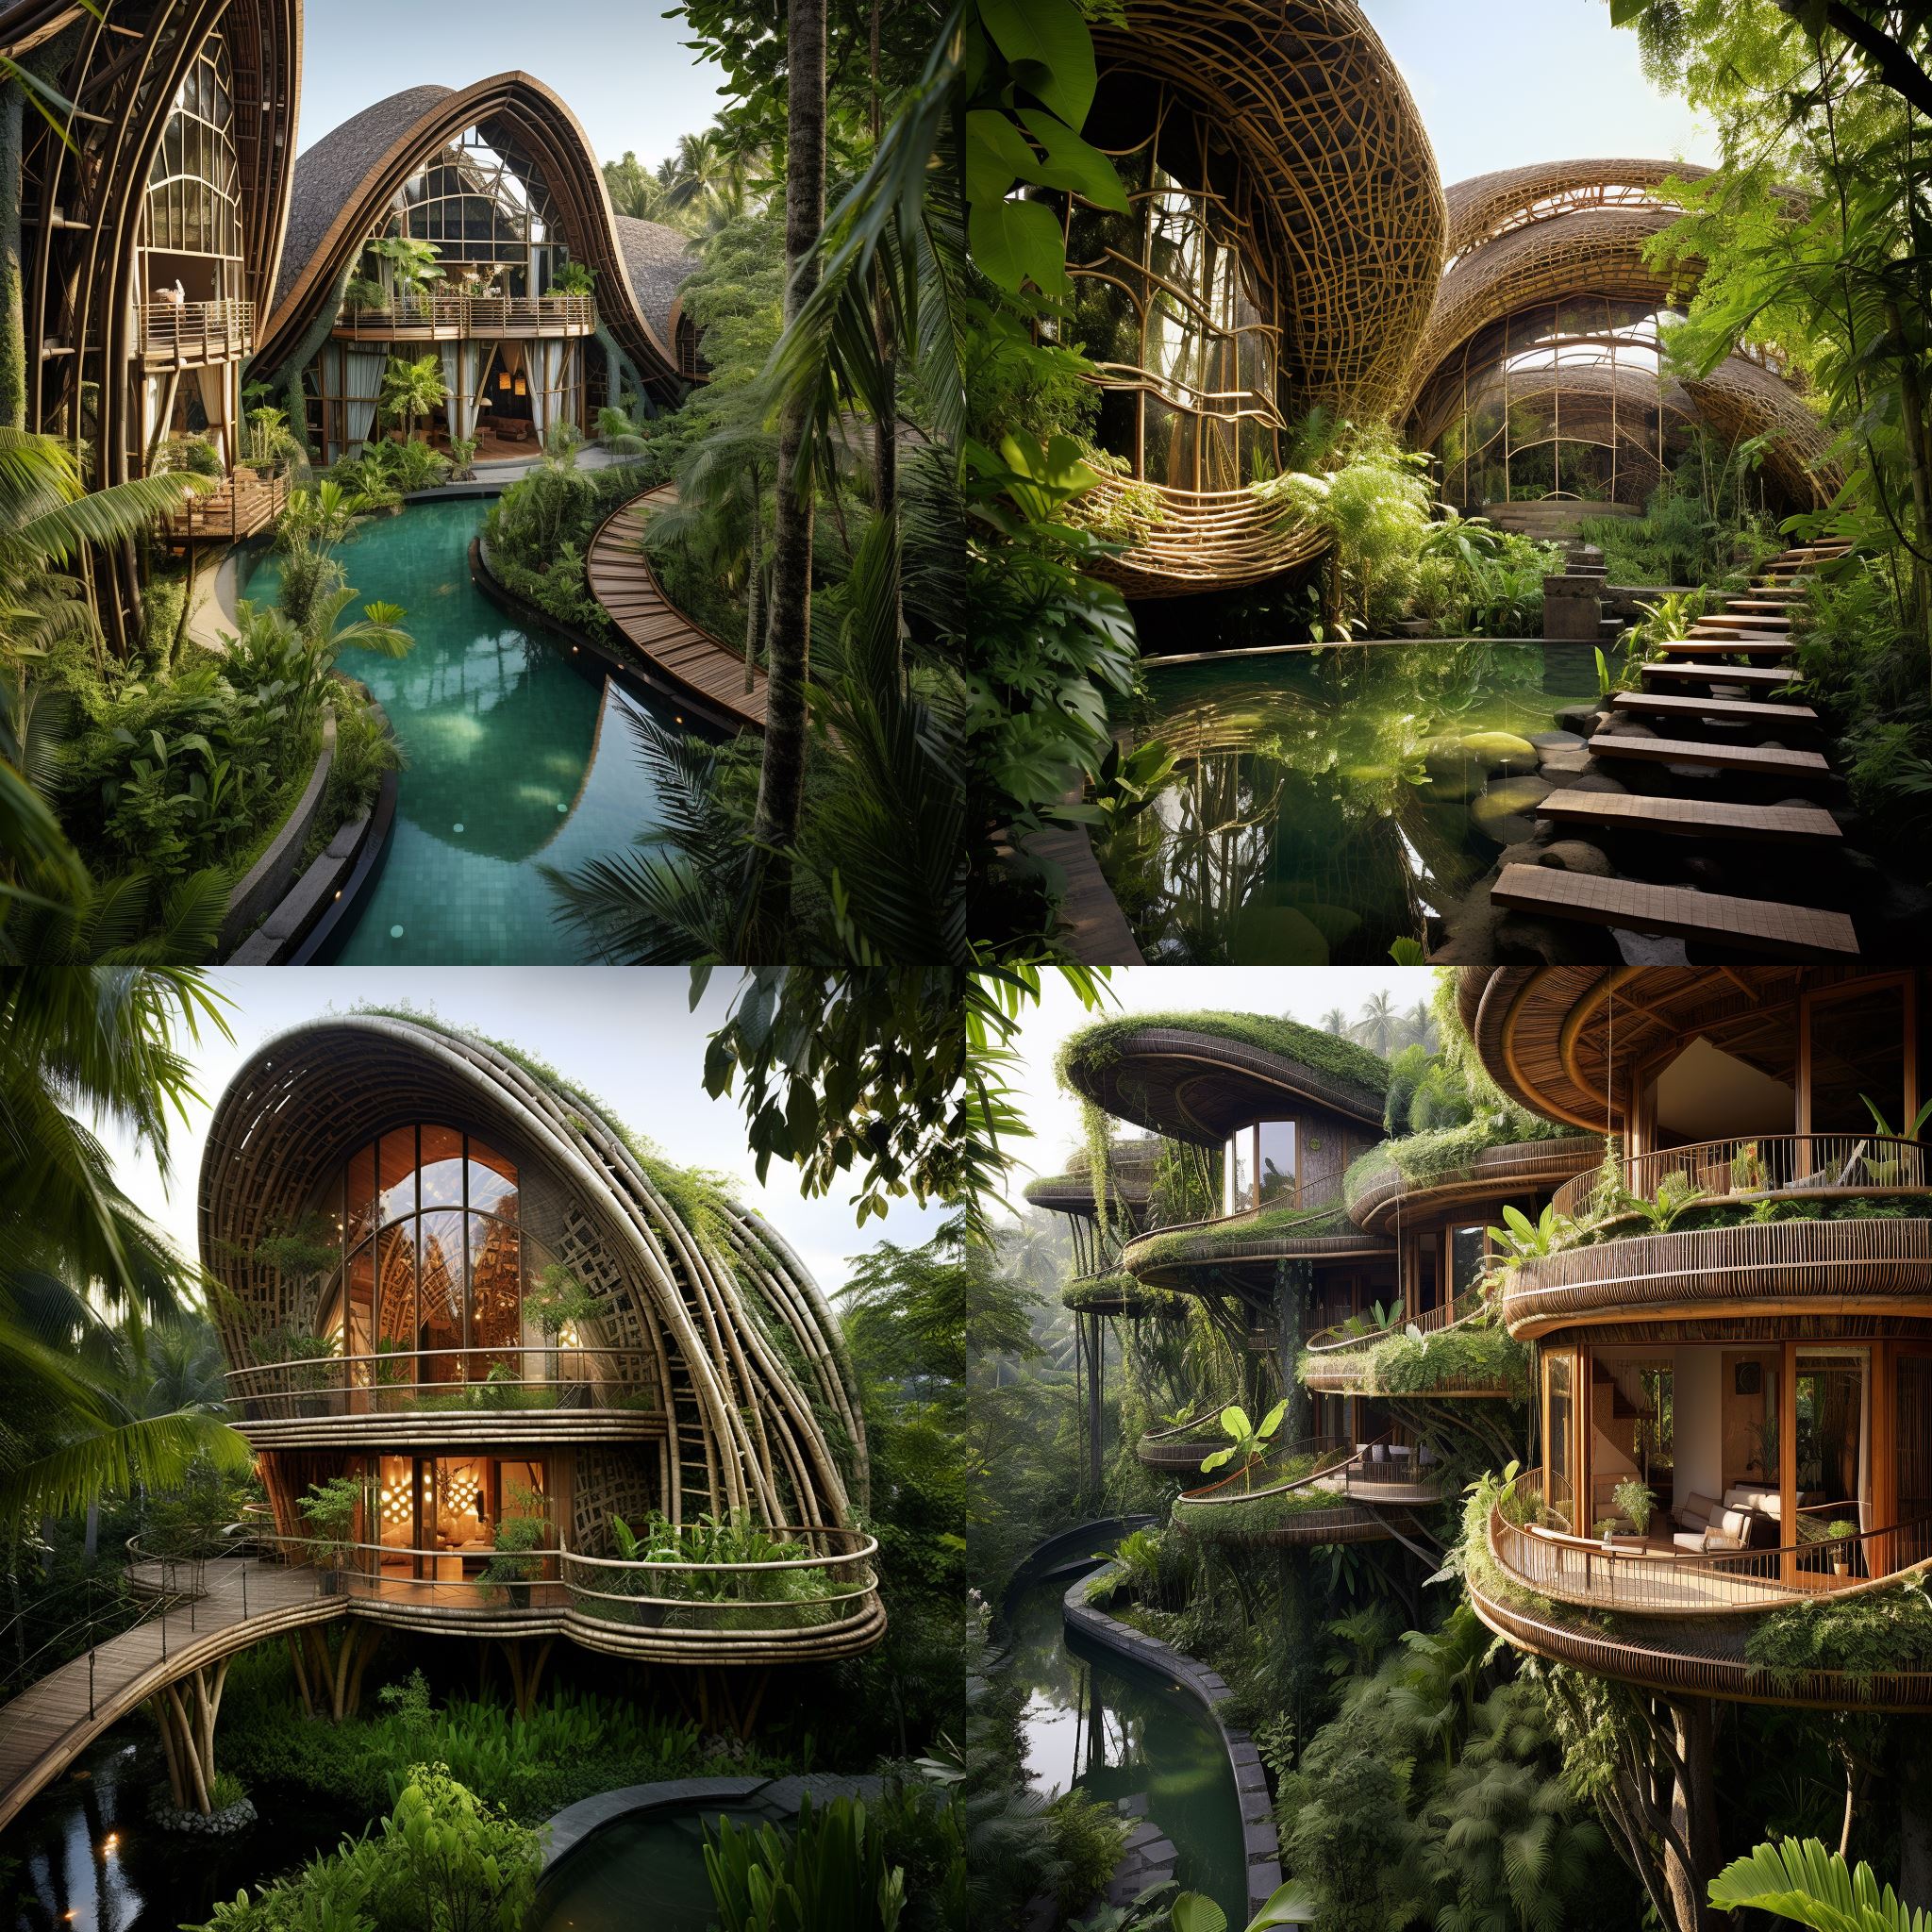 Maisons en bambou de Bali